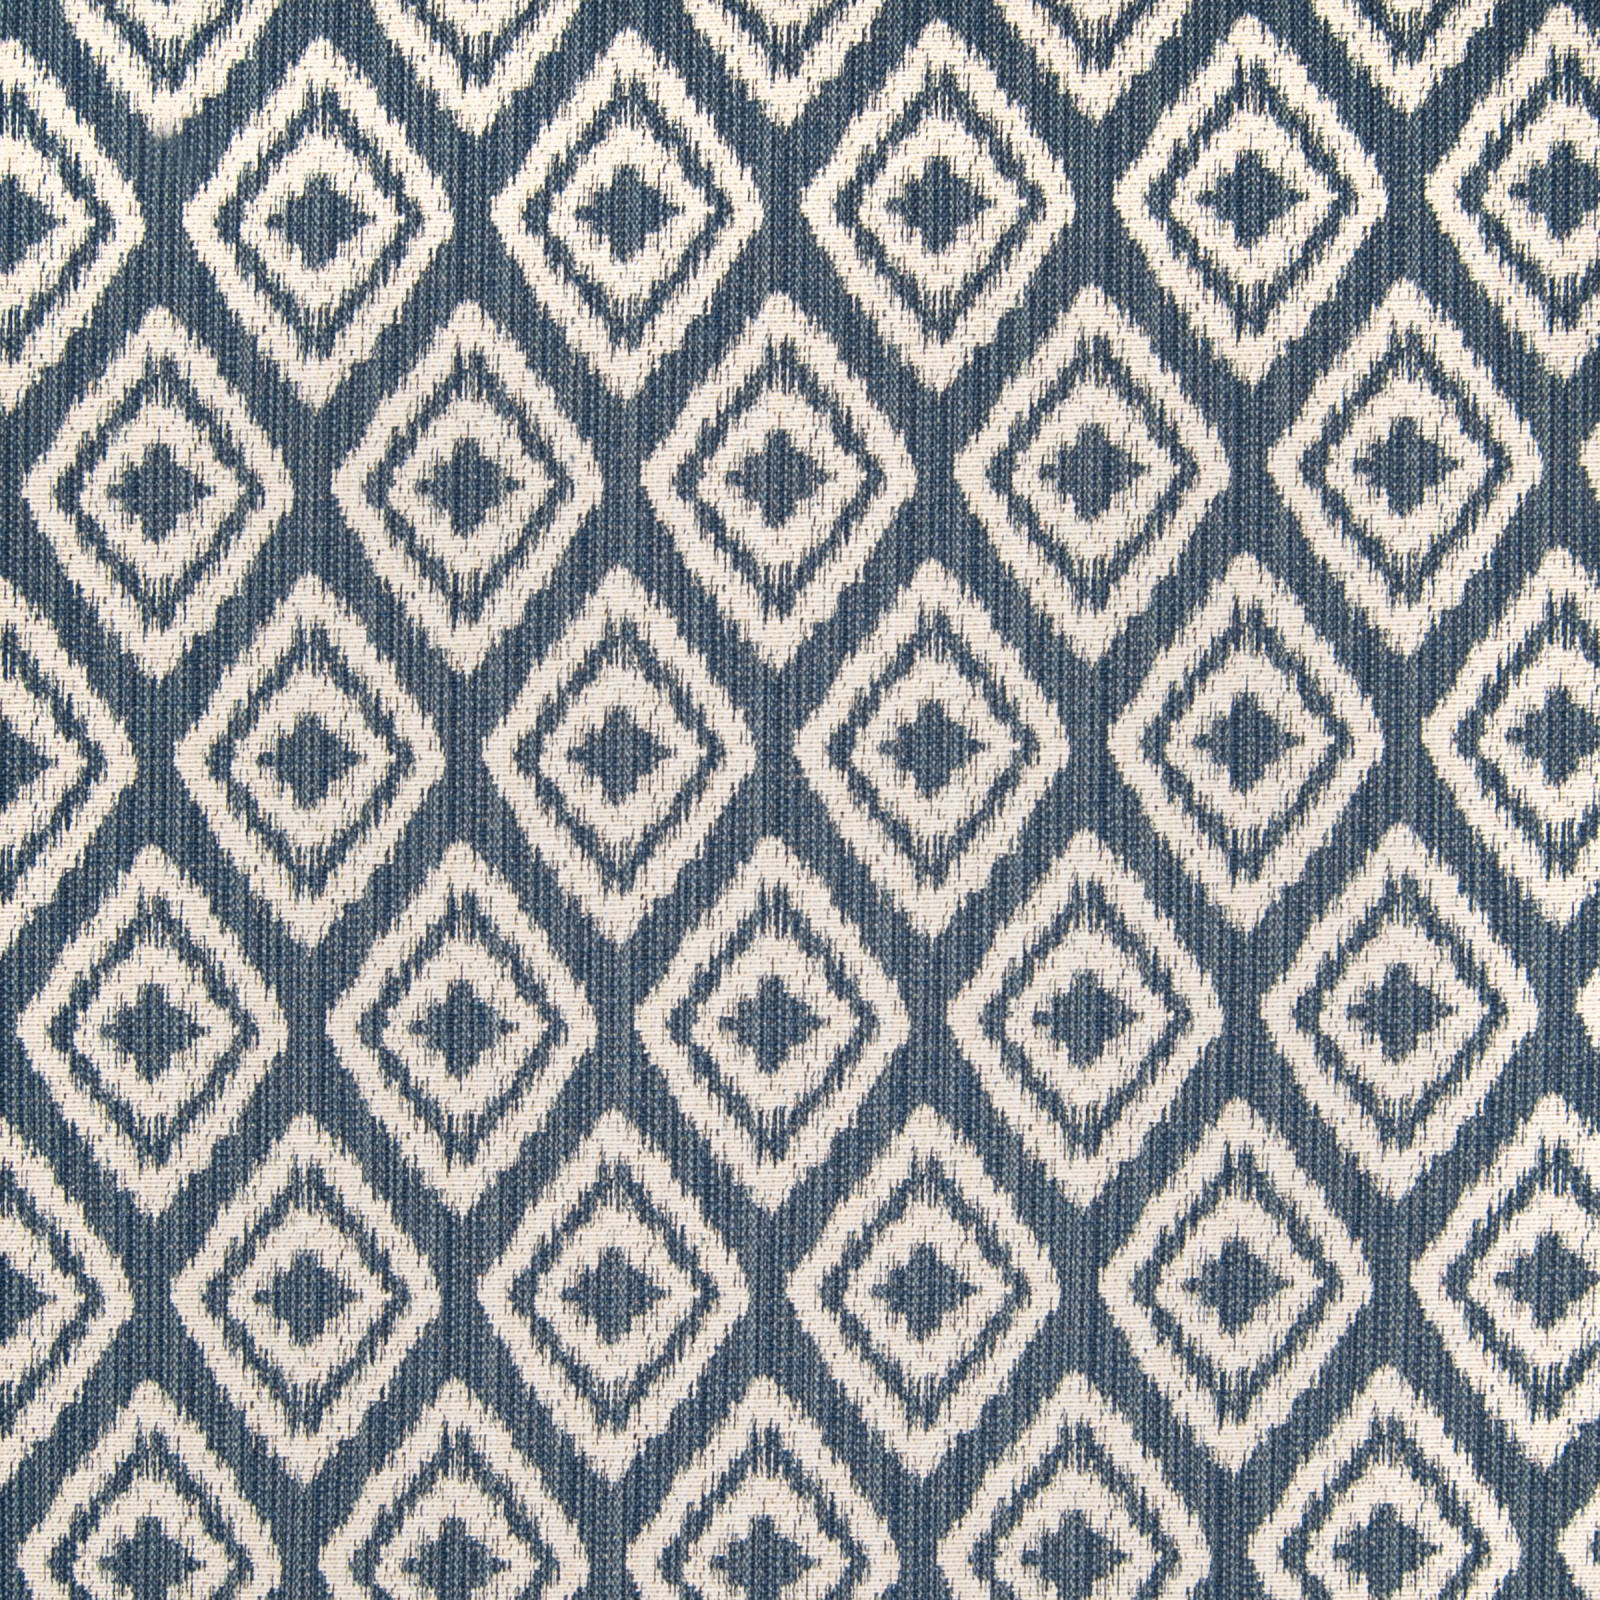 Indigo Blue Diamond Woven Upholstery Fabric